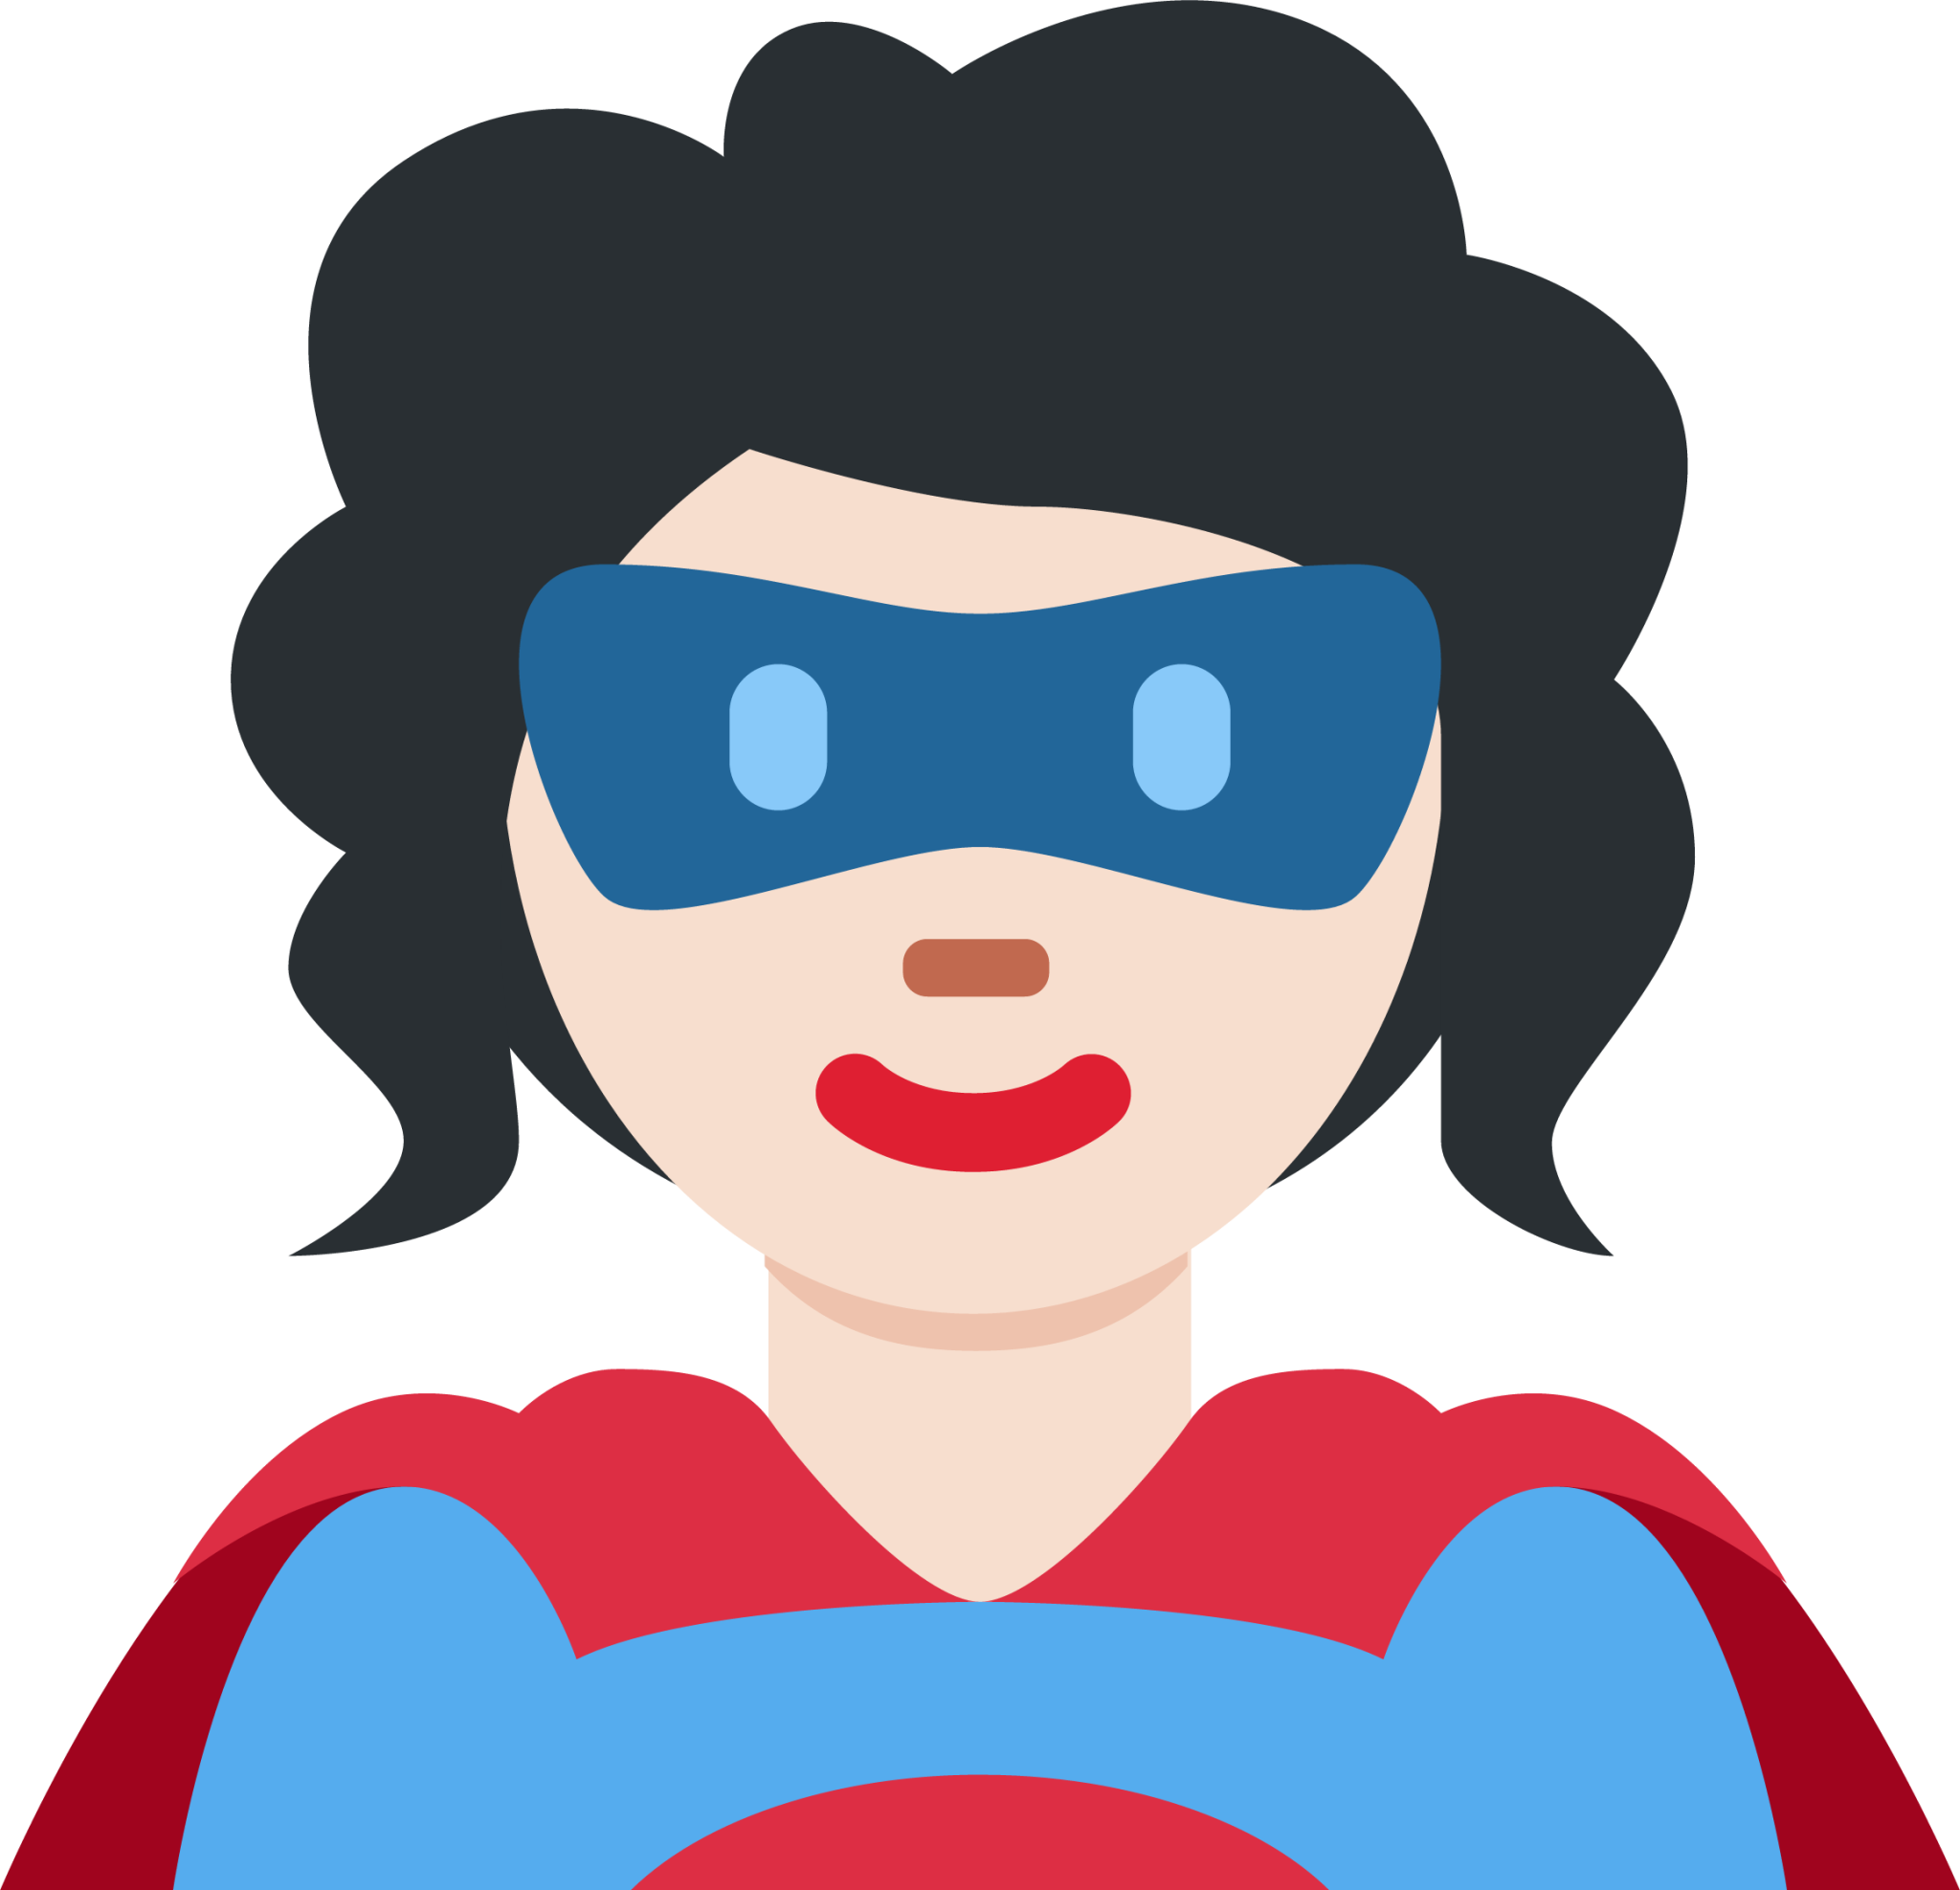 woman superhero: light skin tone emoji